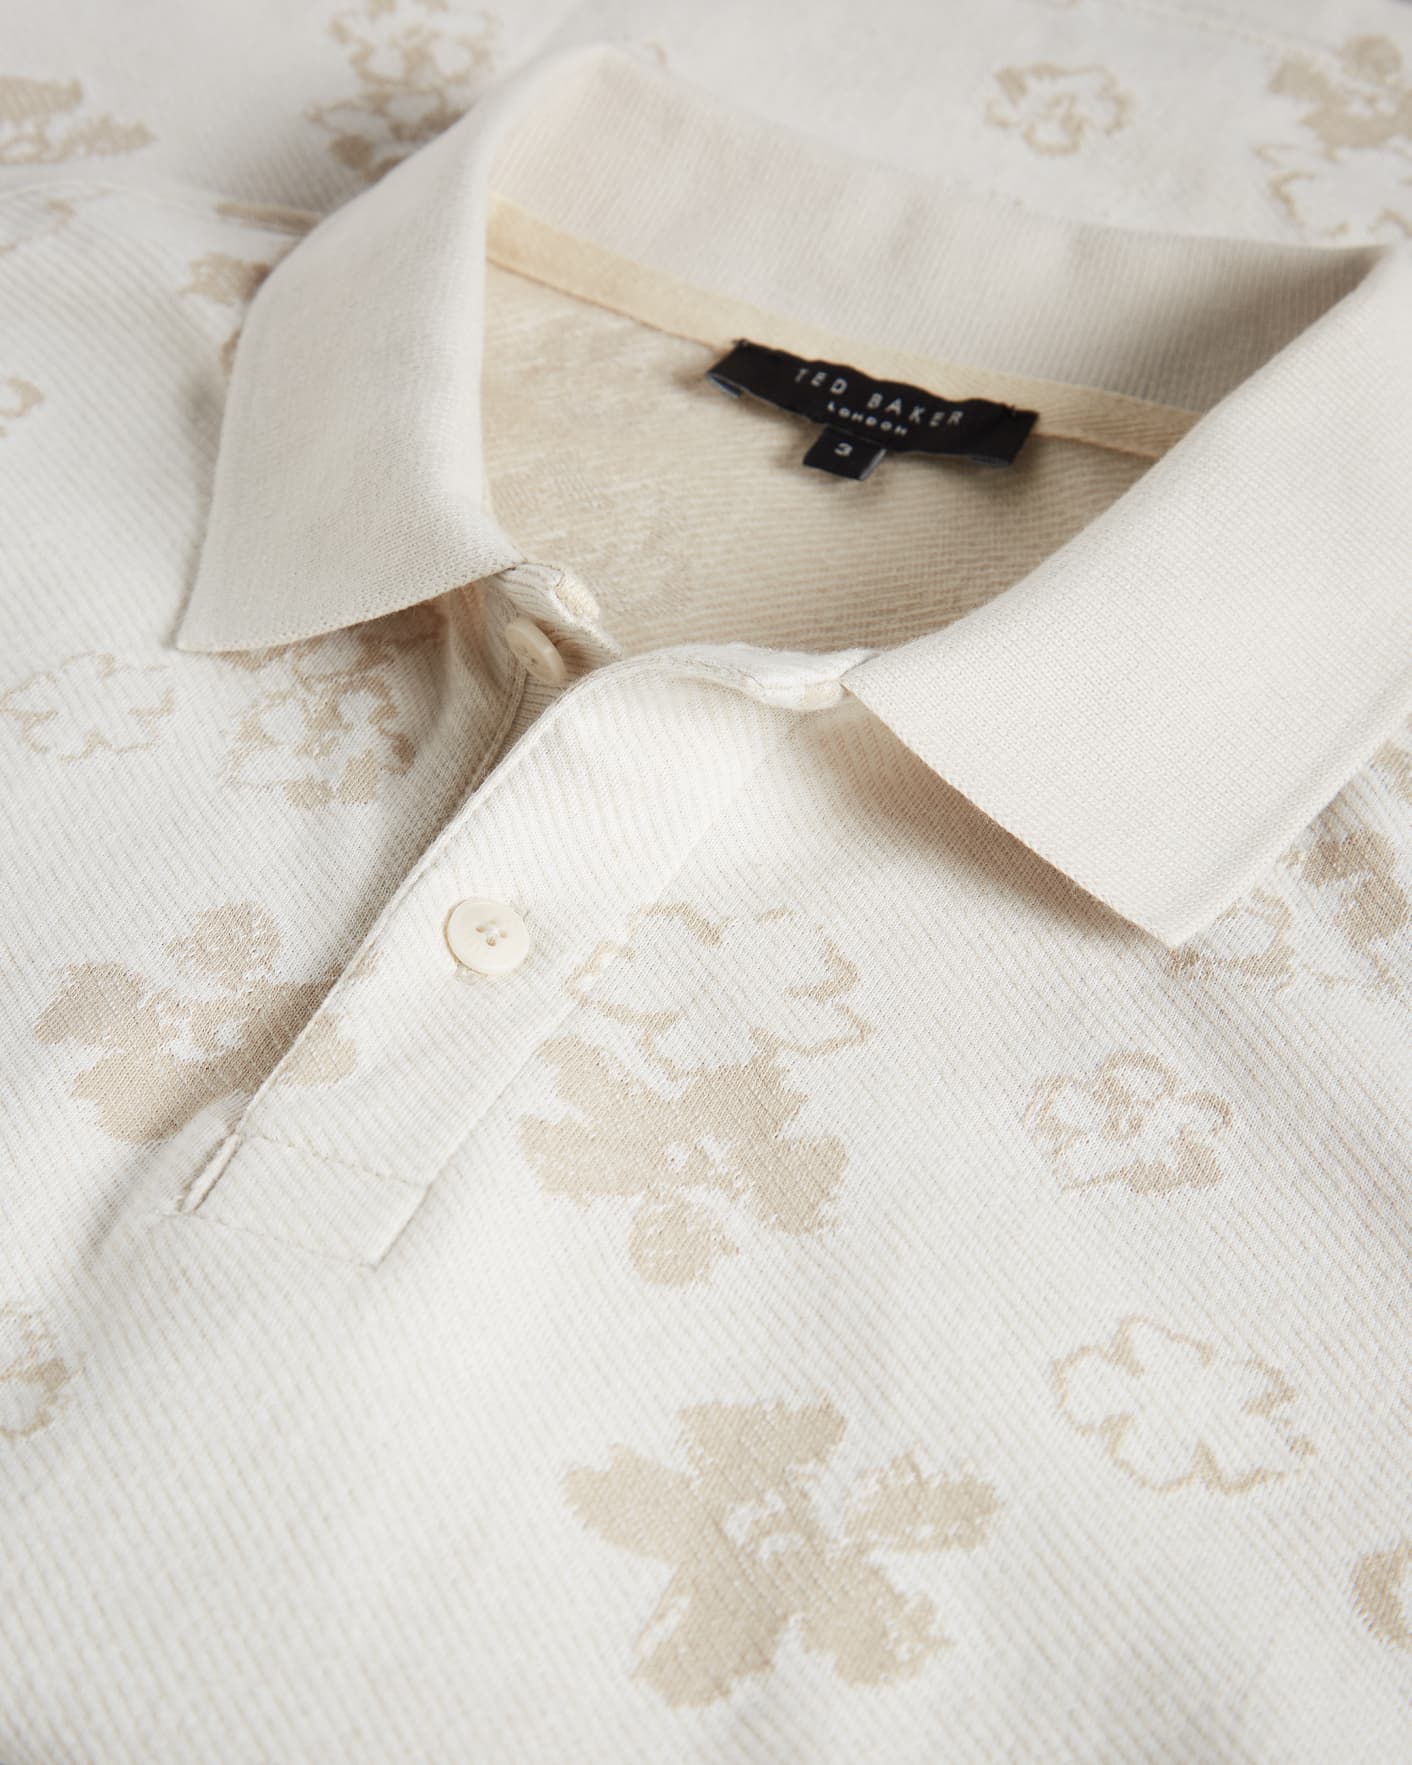 Ecru Short Sleeve Flower Jacquard Polo Shirt Ted Baker